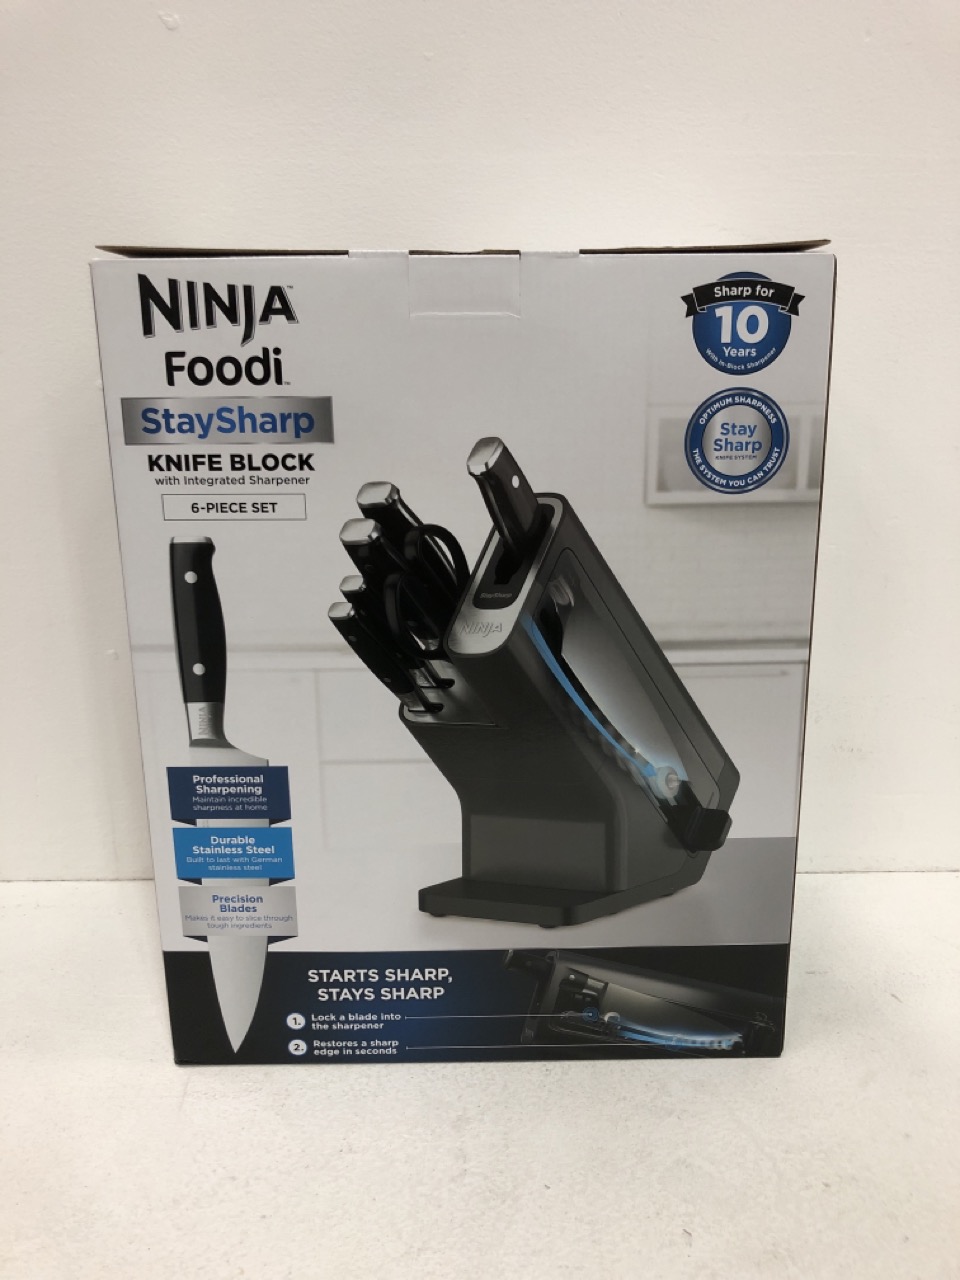 Ninja Foodi StaySharp Knife Block with Integrated Sharpener 6